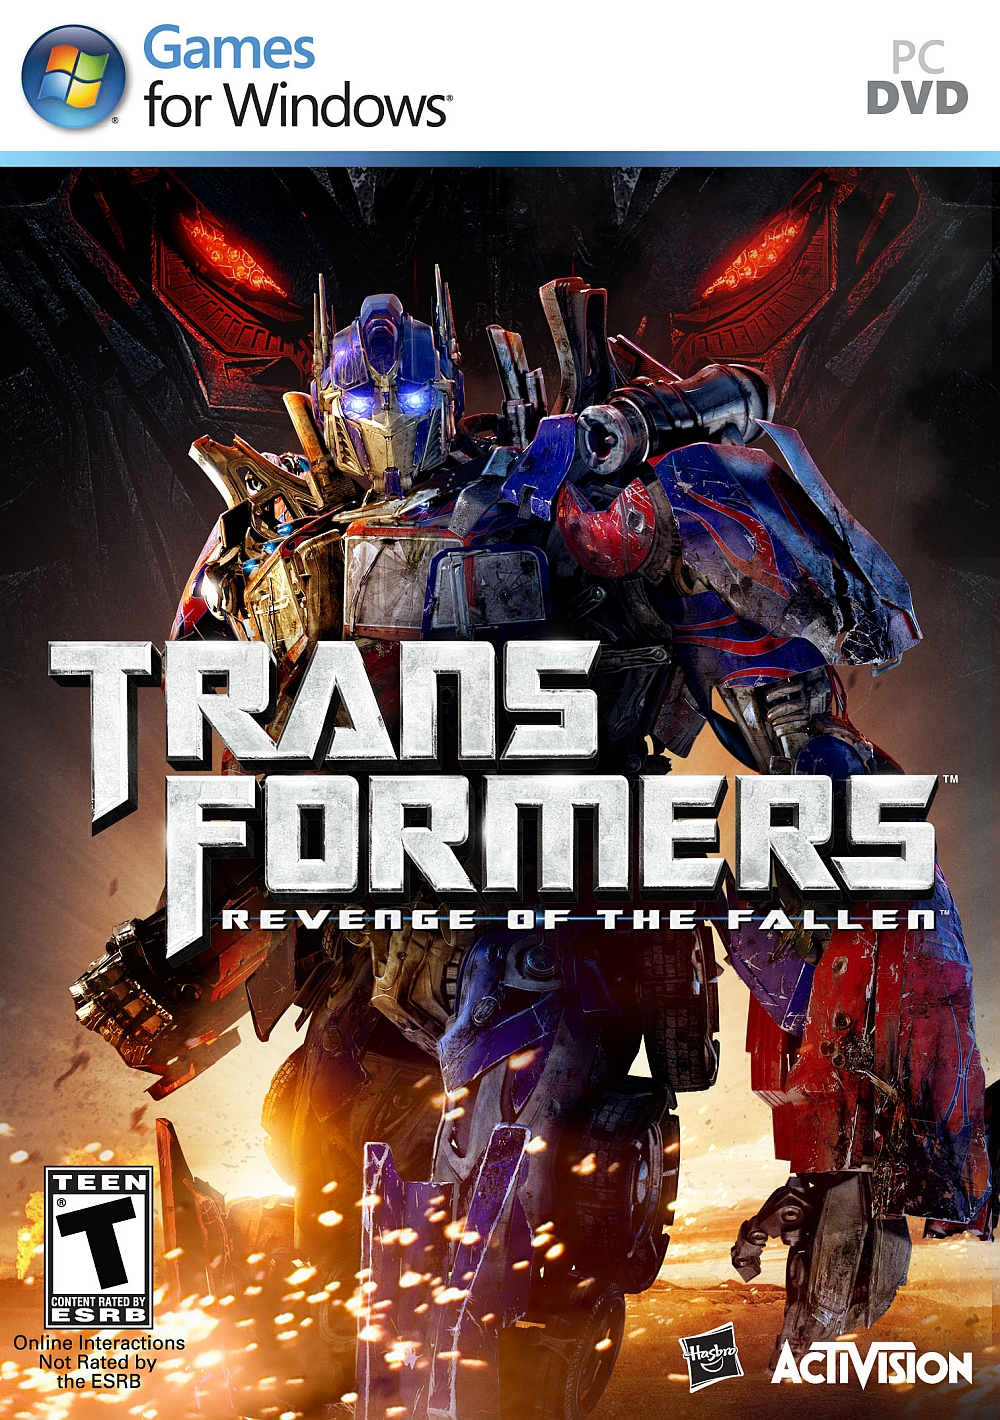 transformer revenge of the fallen pc game free download